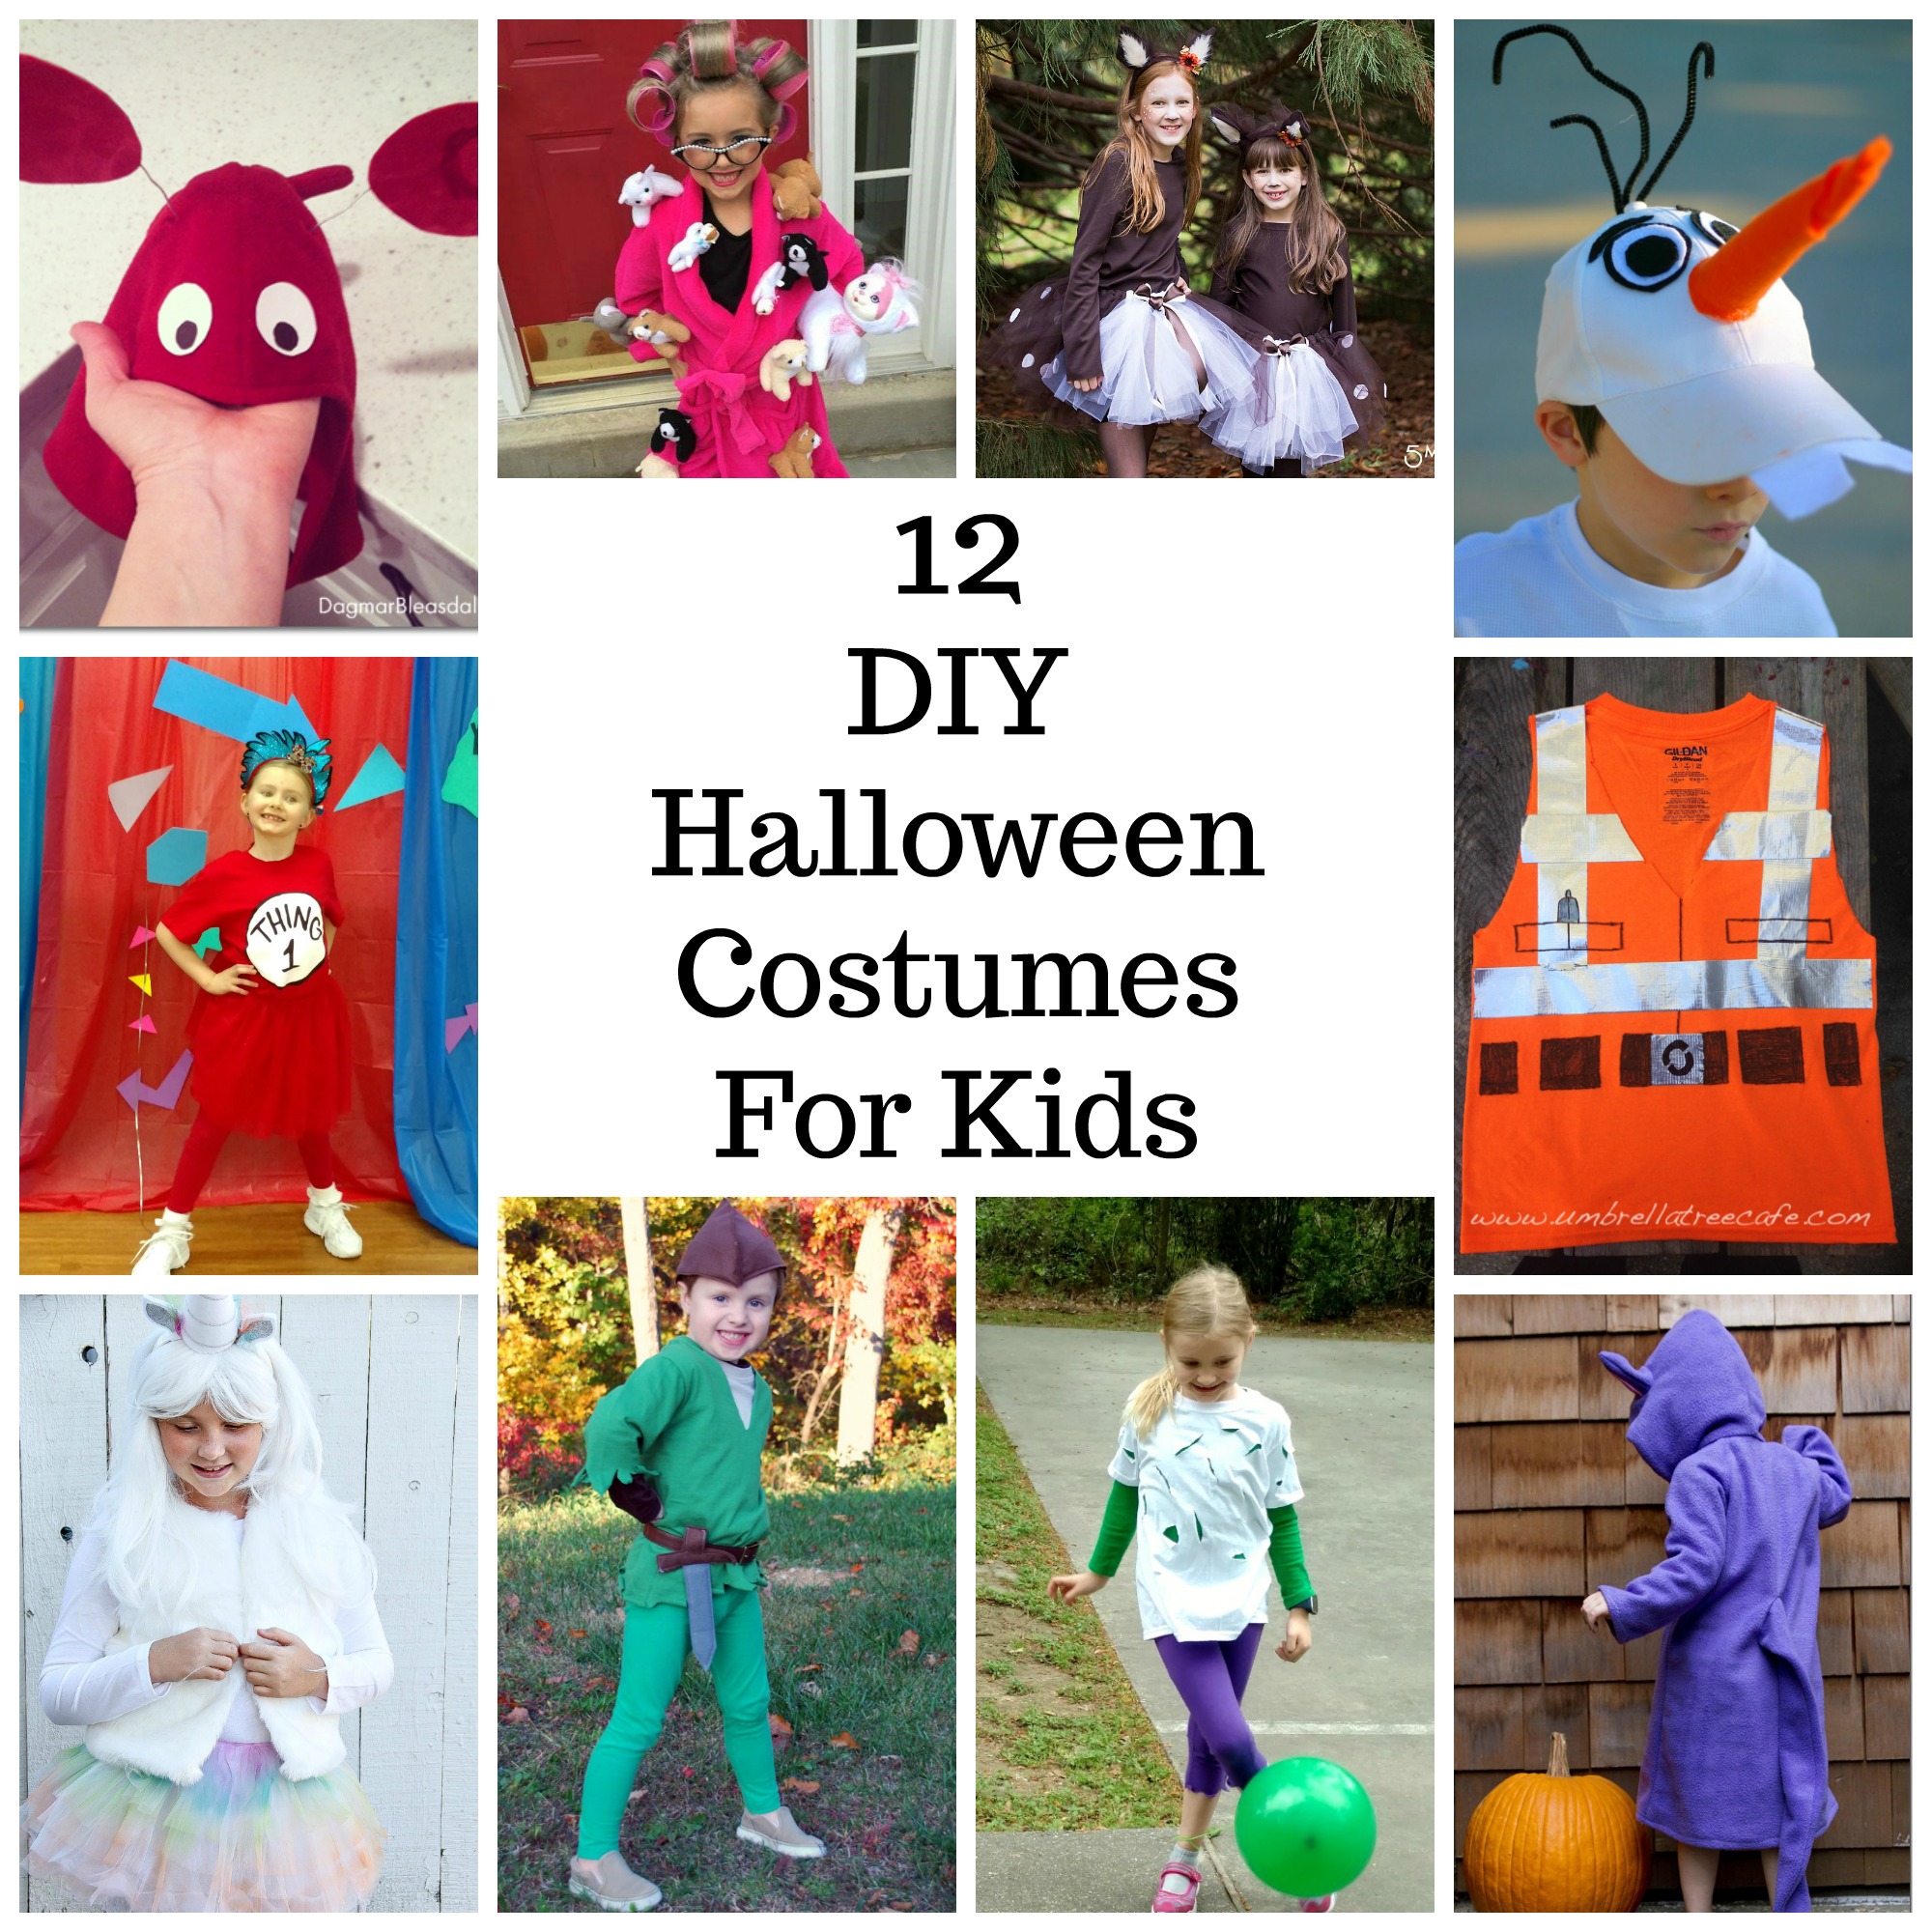 12 DIY Halloween Costume Ideas For Kids - Family Fun Journal